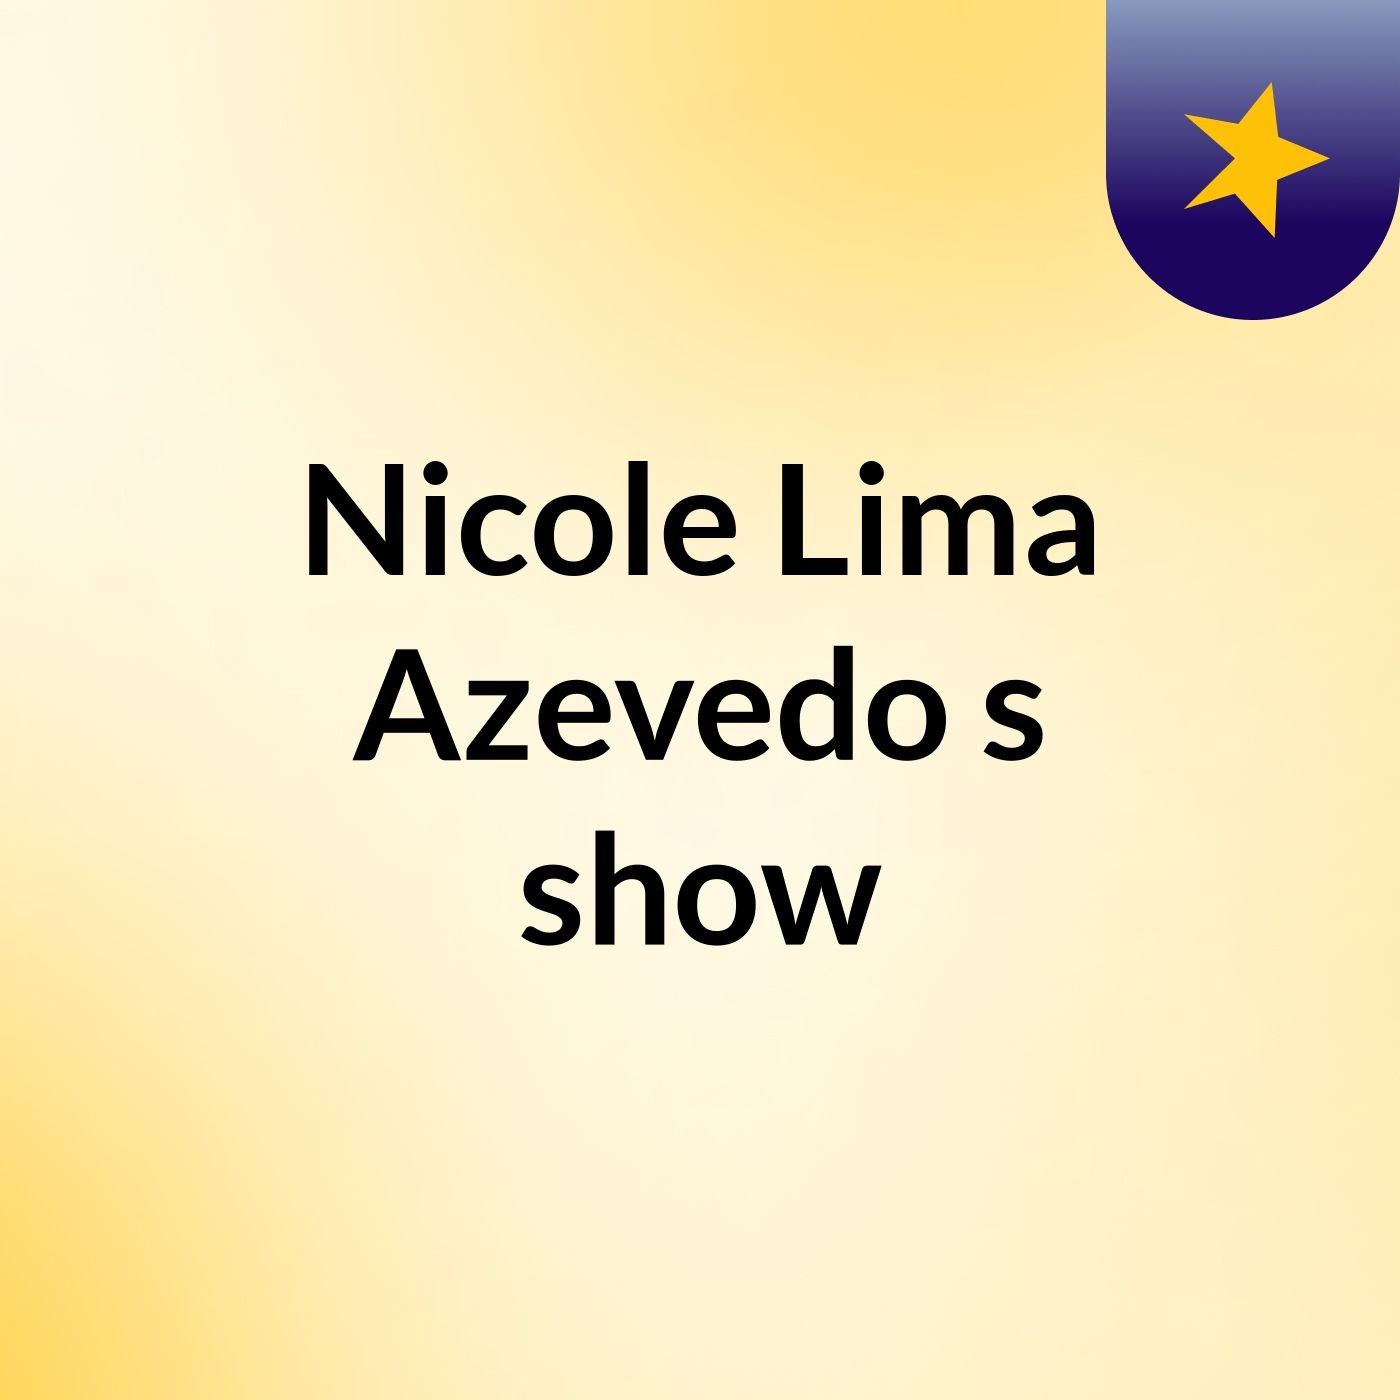 Nicole Lima Azevedo's show